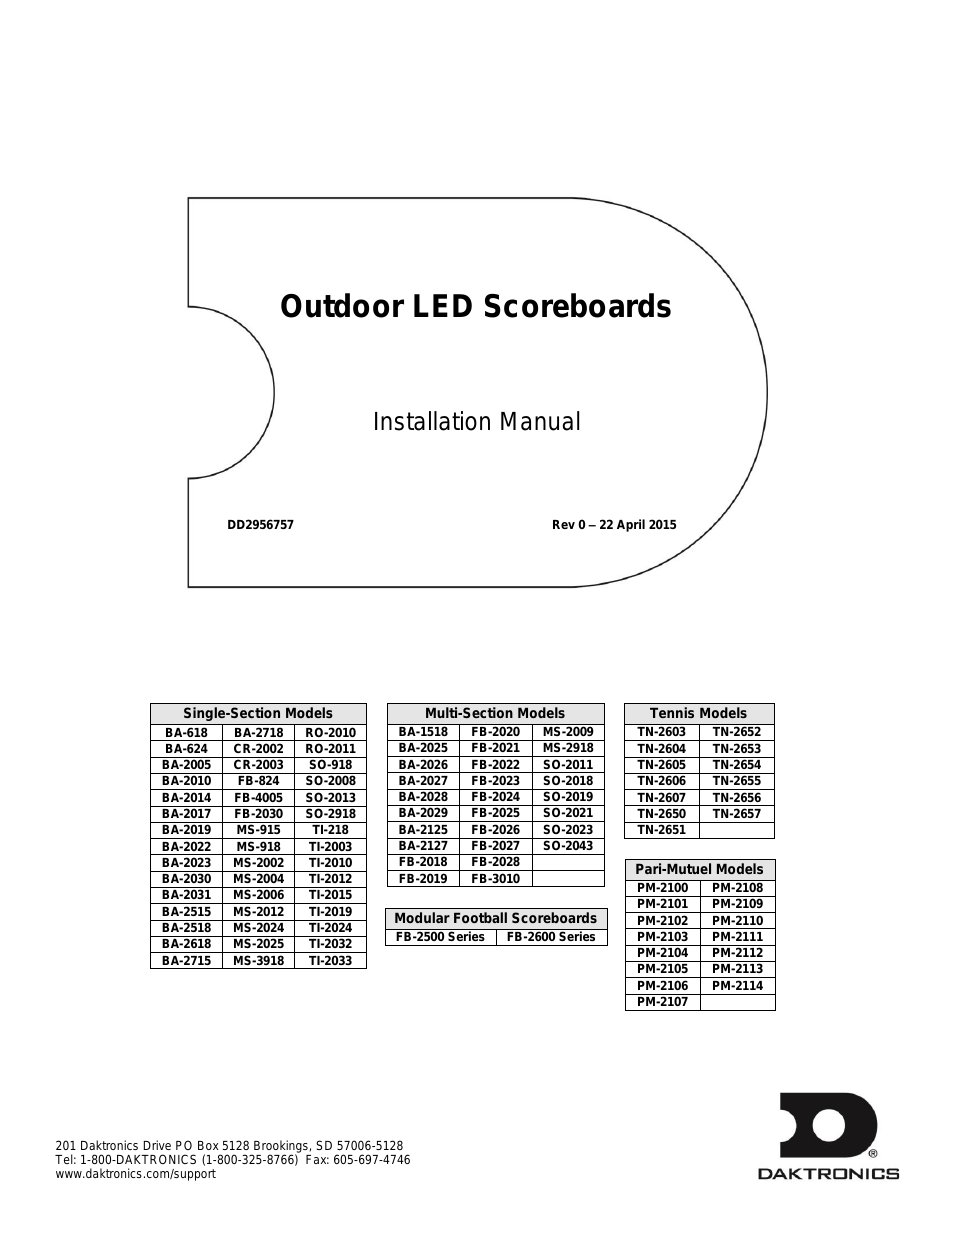 Outdoor LED Scoreboards Installation